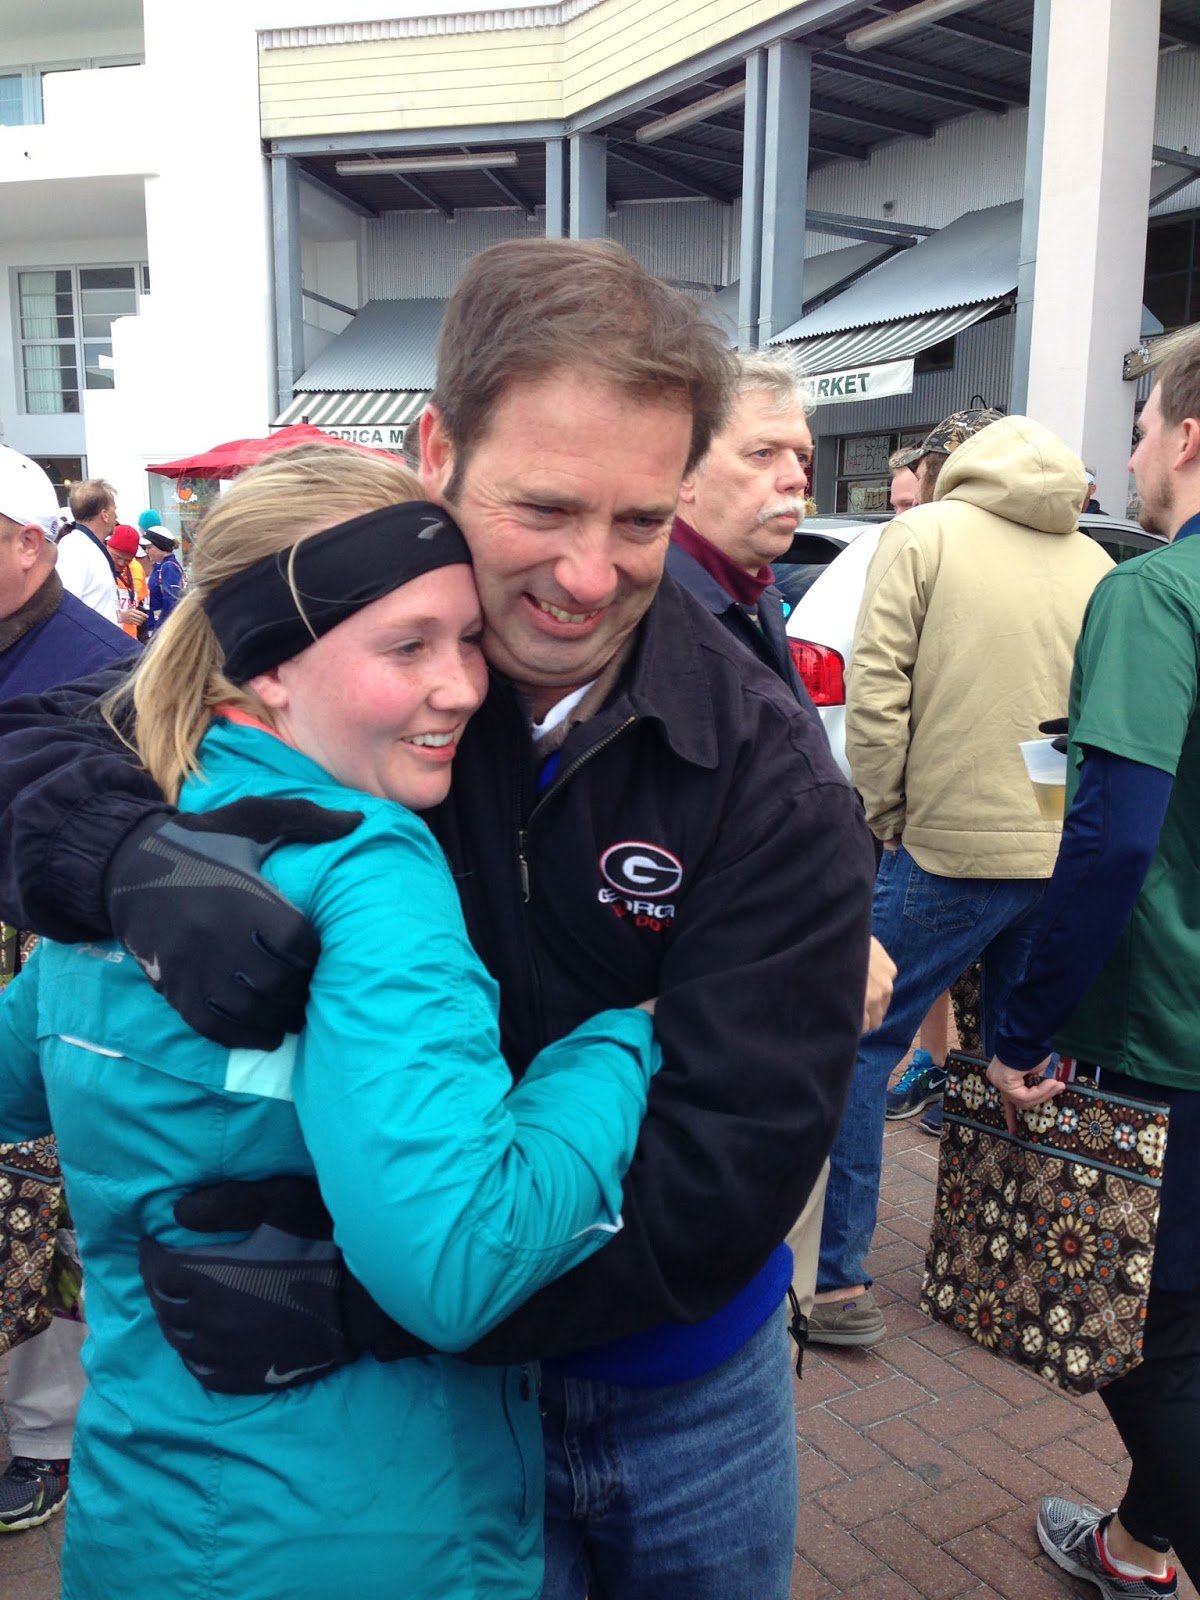 Tom Miller suprises his daughter at the race